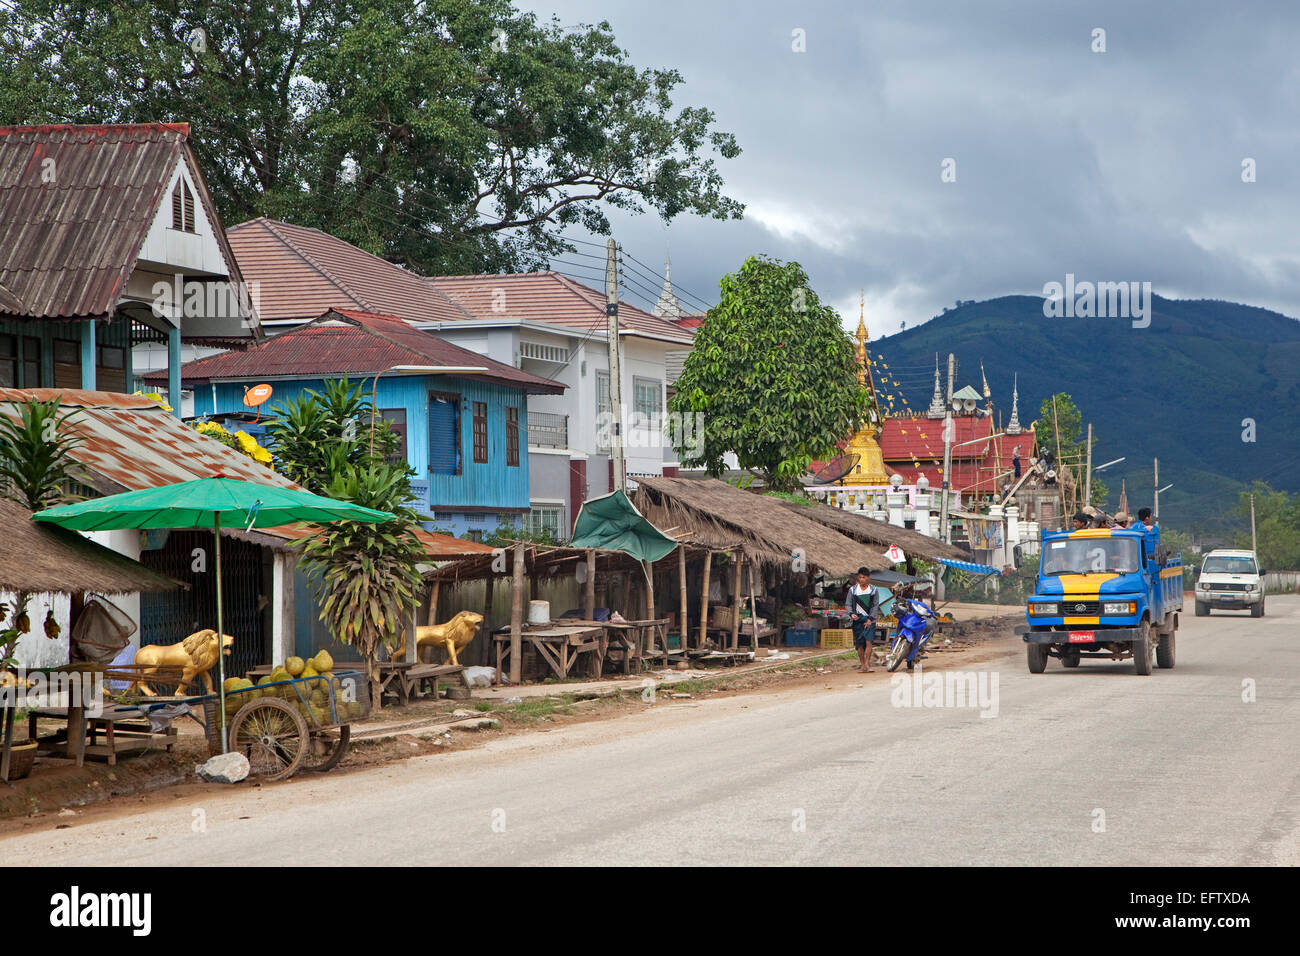 Food stalls along street in village in the Tachileik District, Shan State, Myanmar / Burma Stock Photo